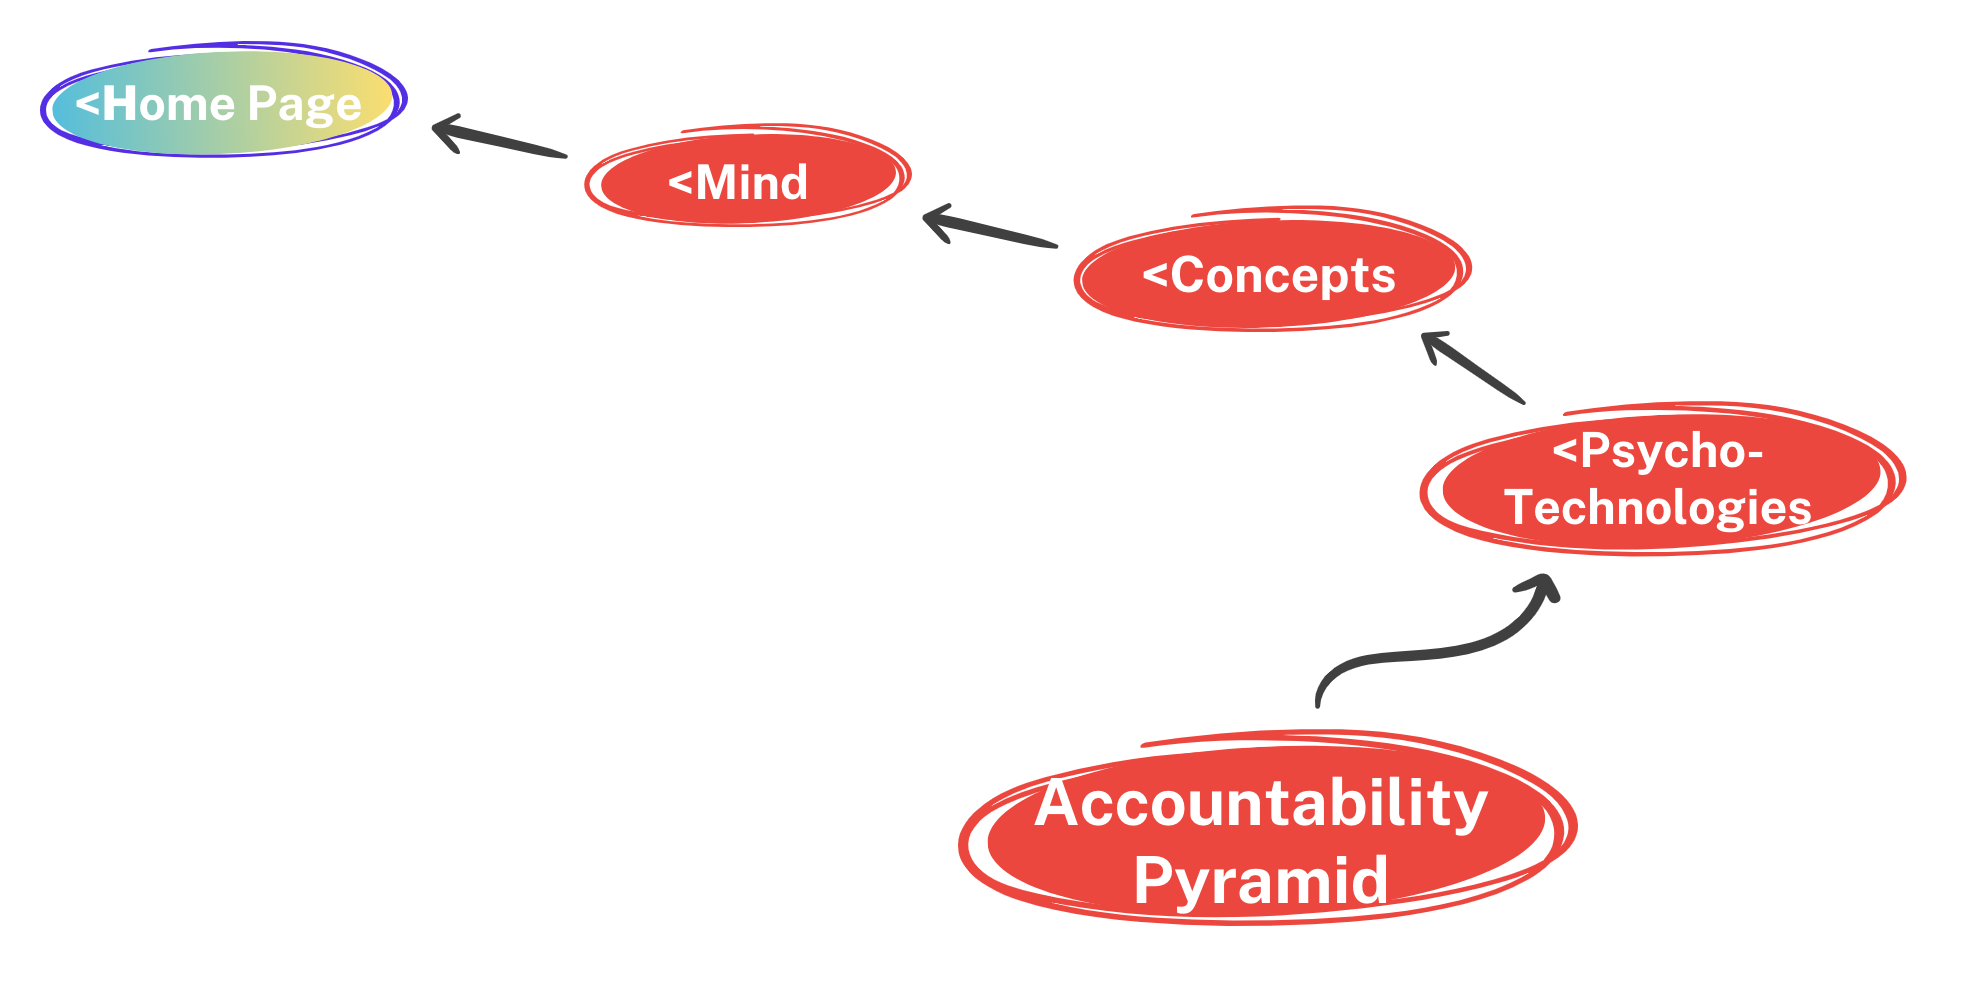 Accountability Pyramid